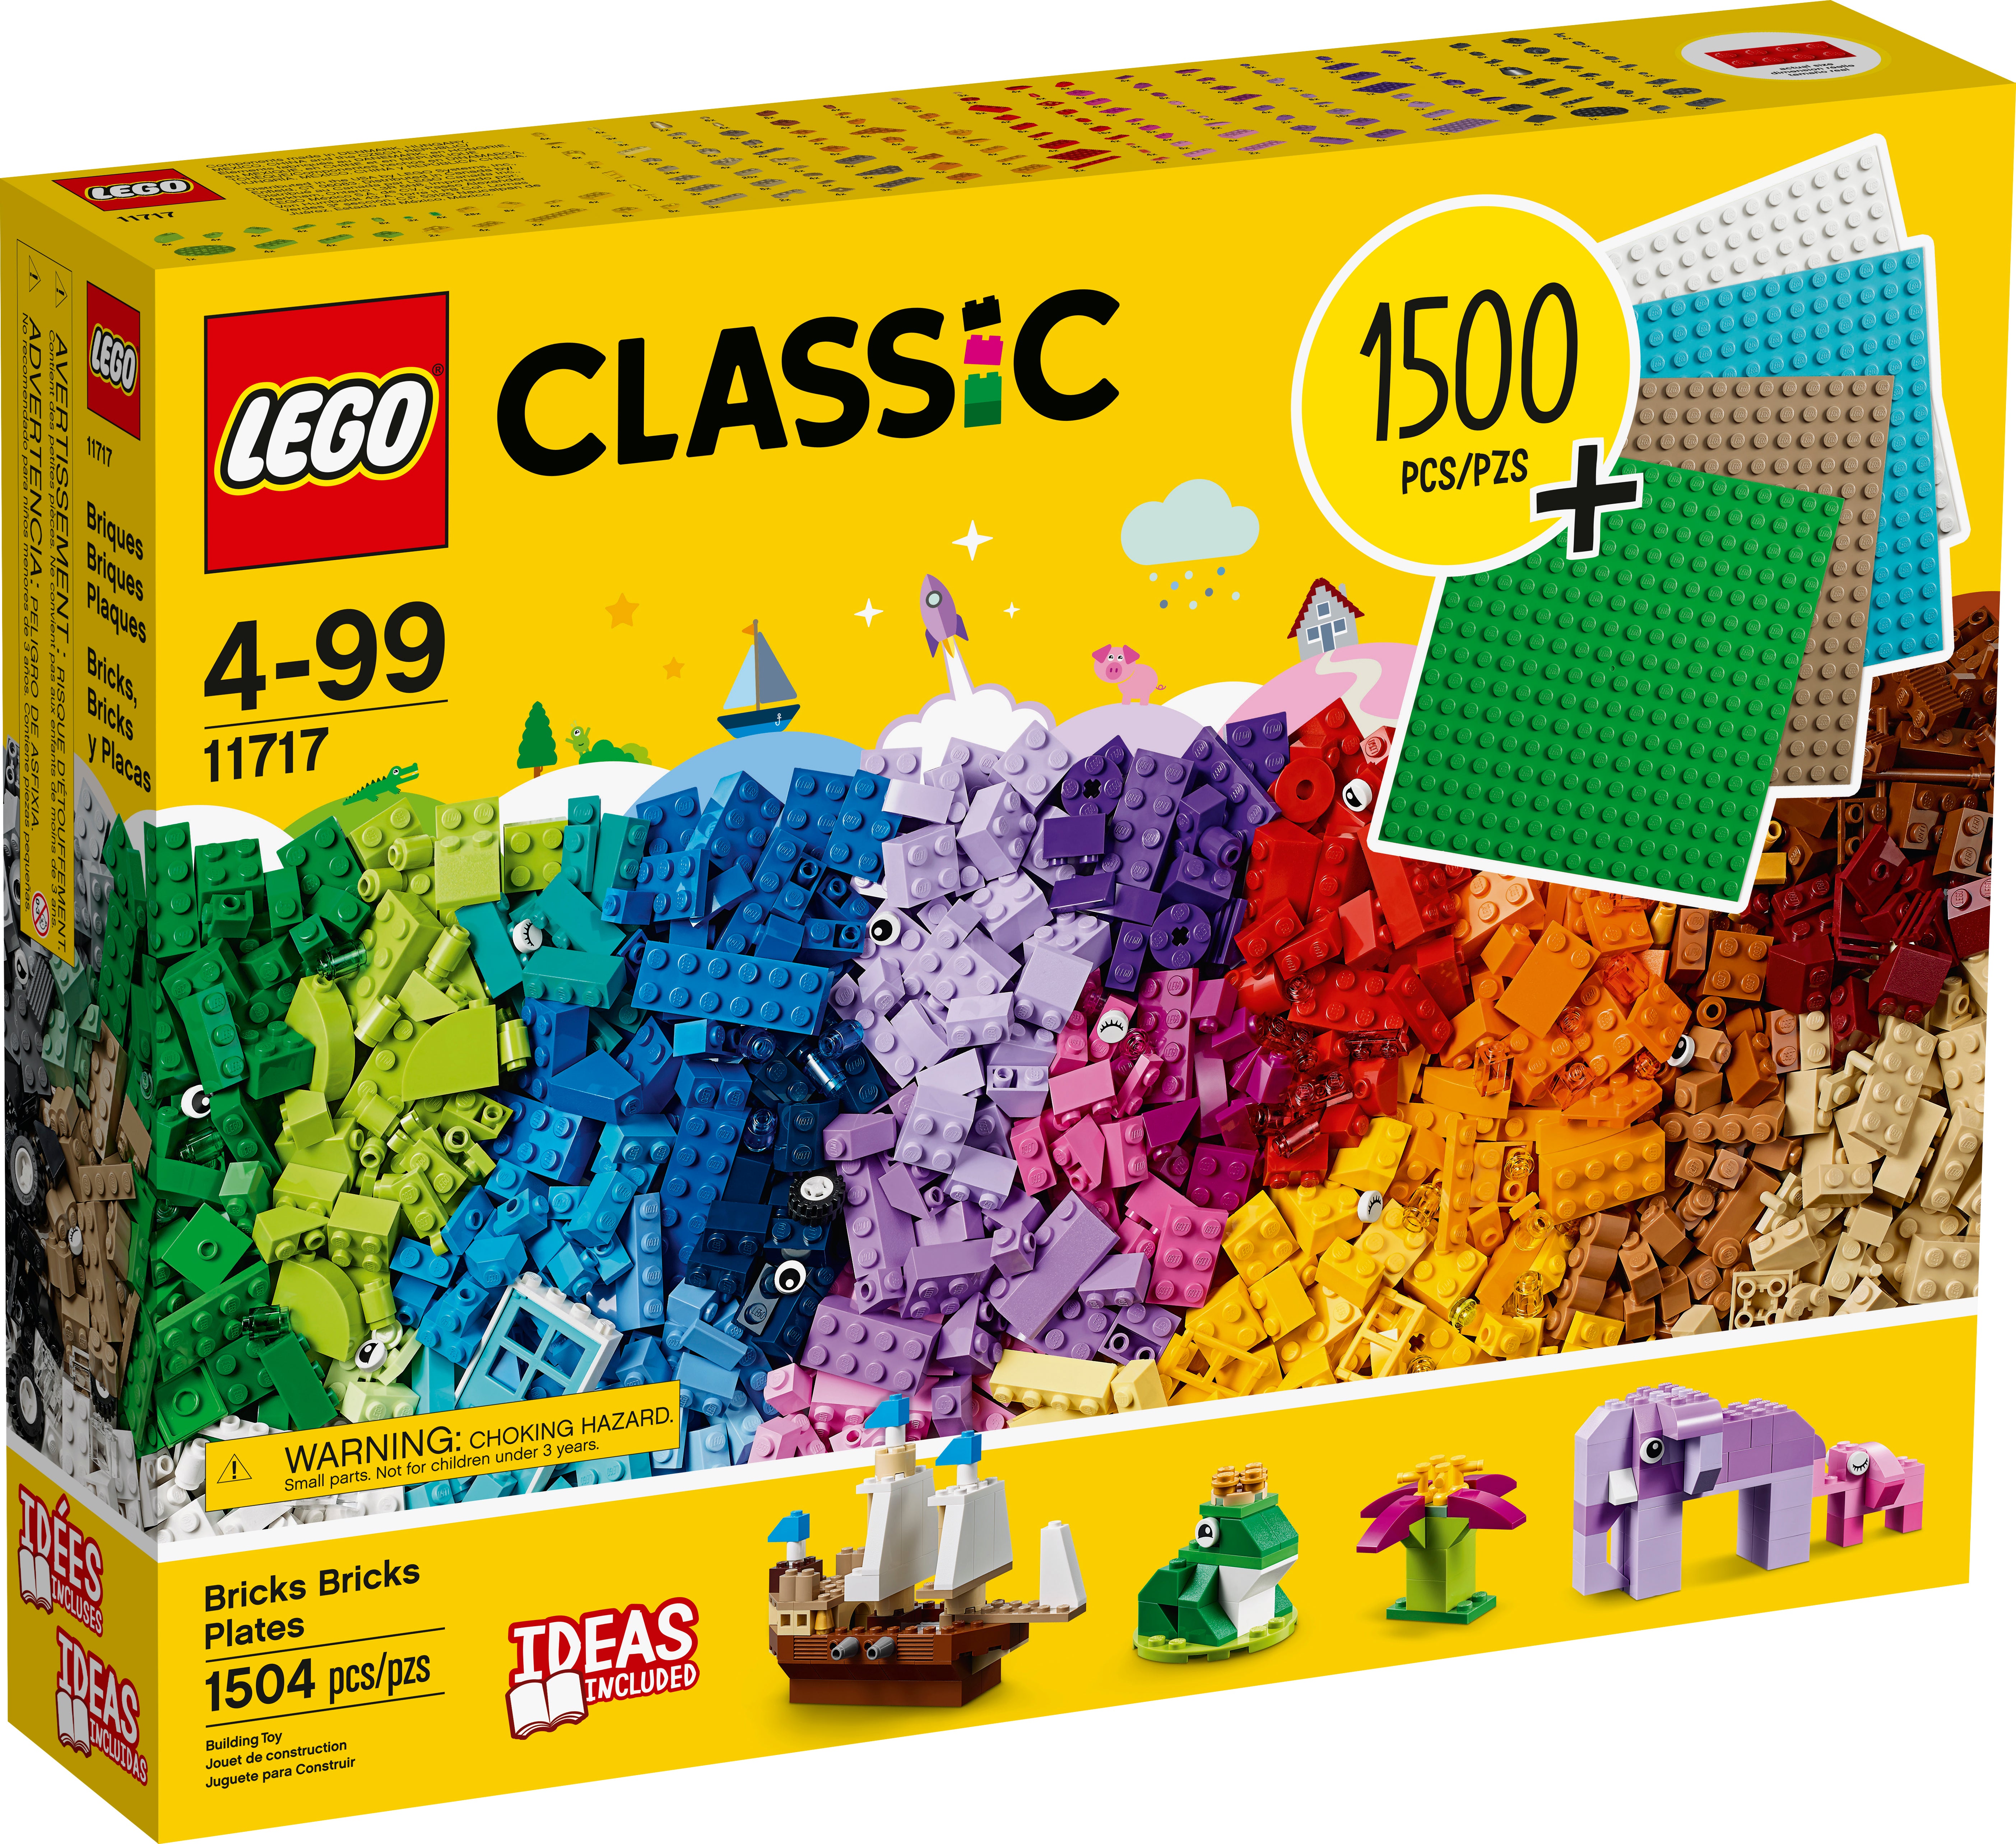 Assorted Plates Blocks LEGO VALUE PACK 100 Pcs Bricks Girl Friends Color